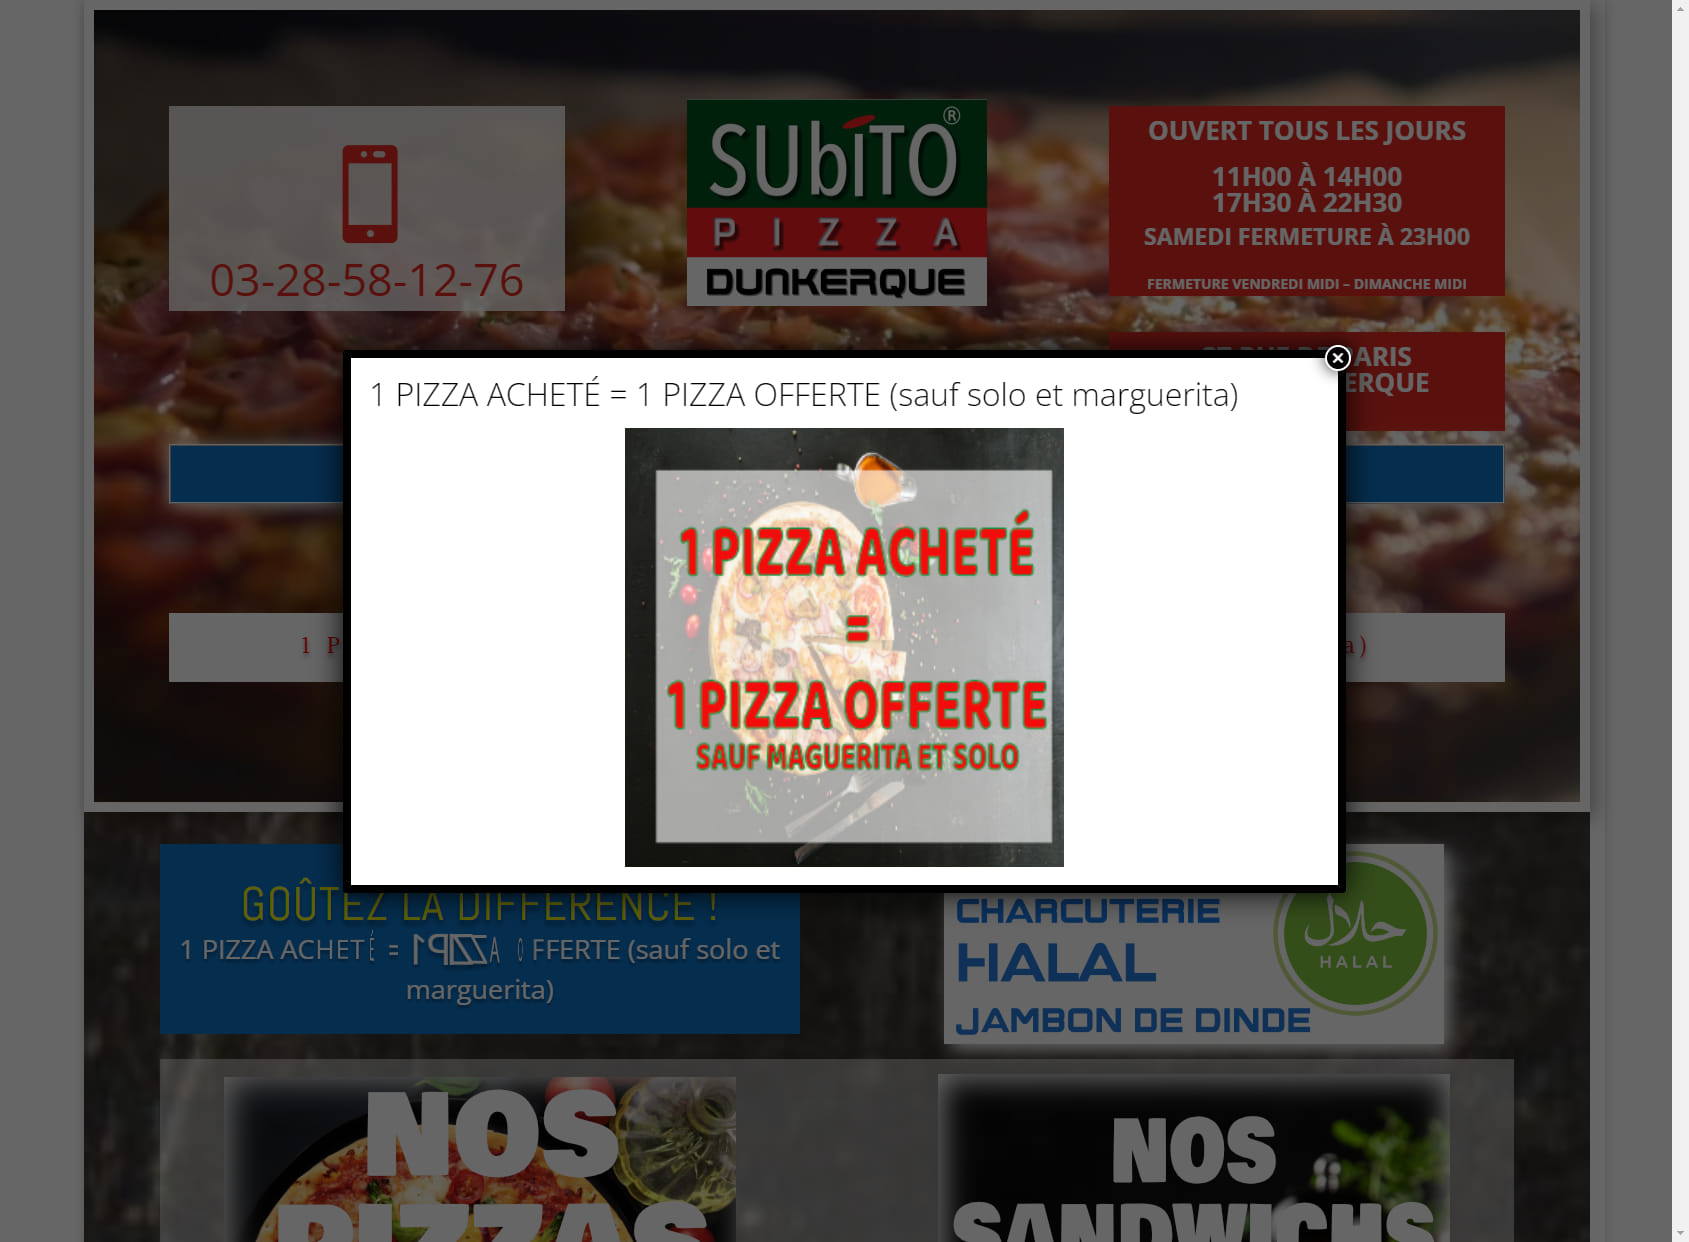 Subito Pizza Dunkerque